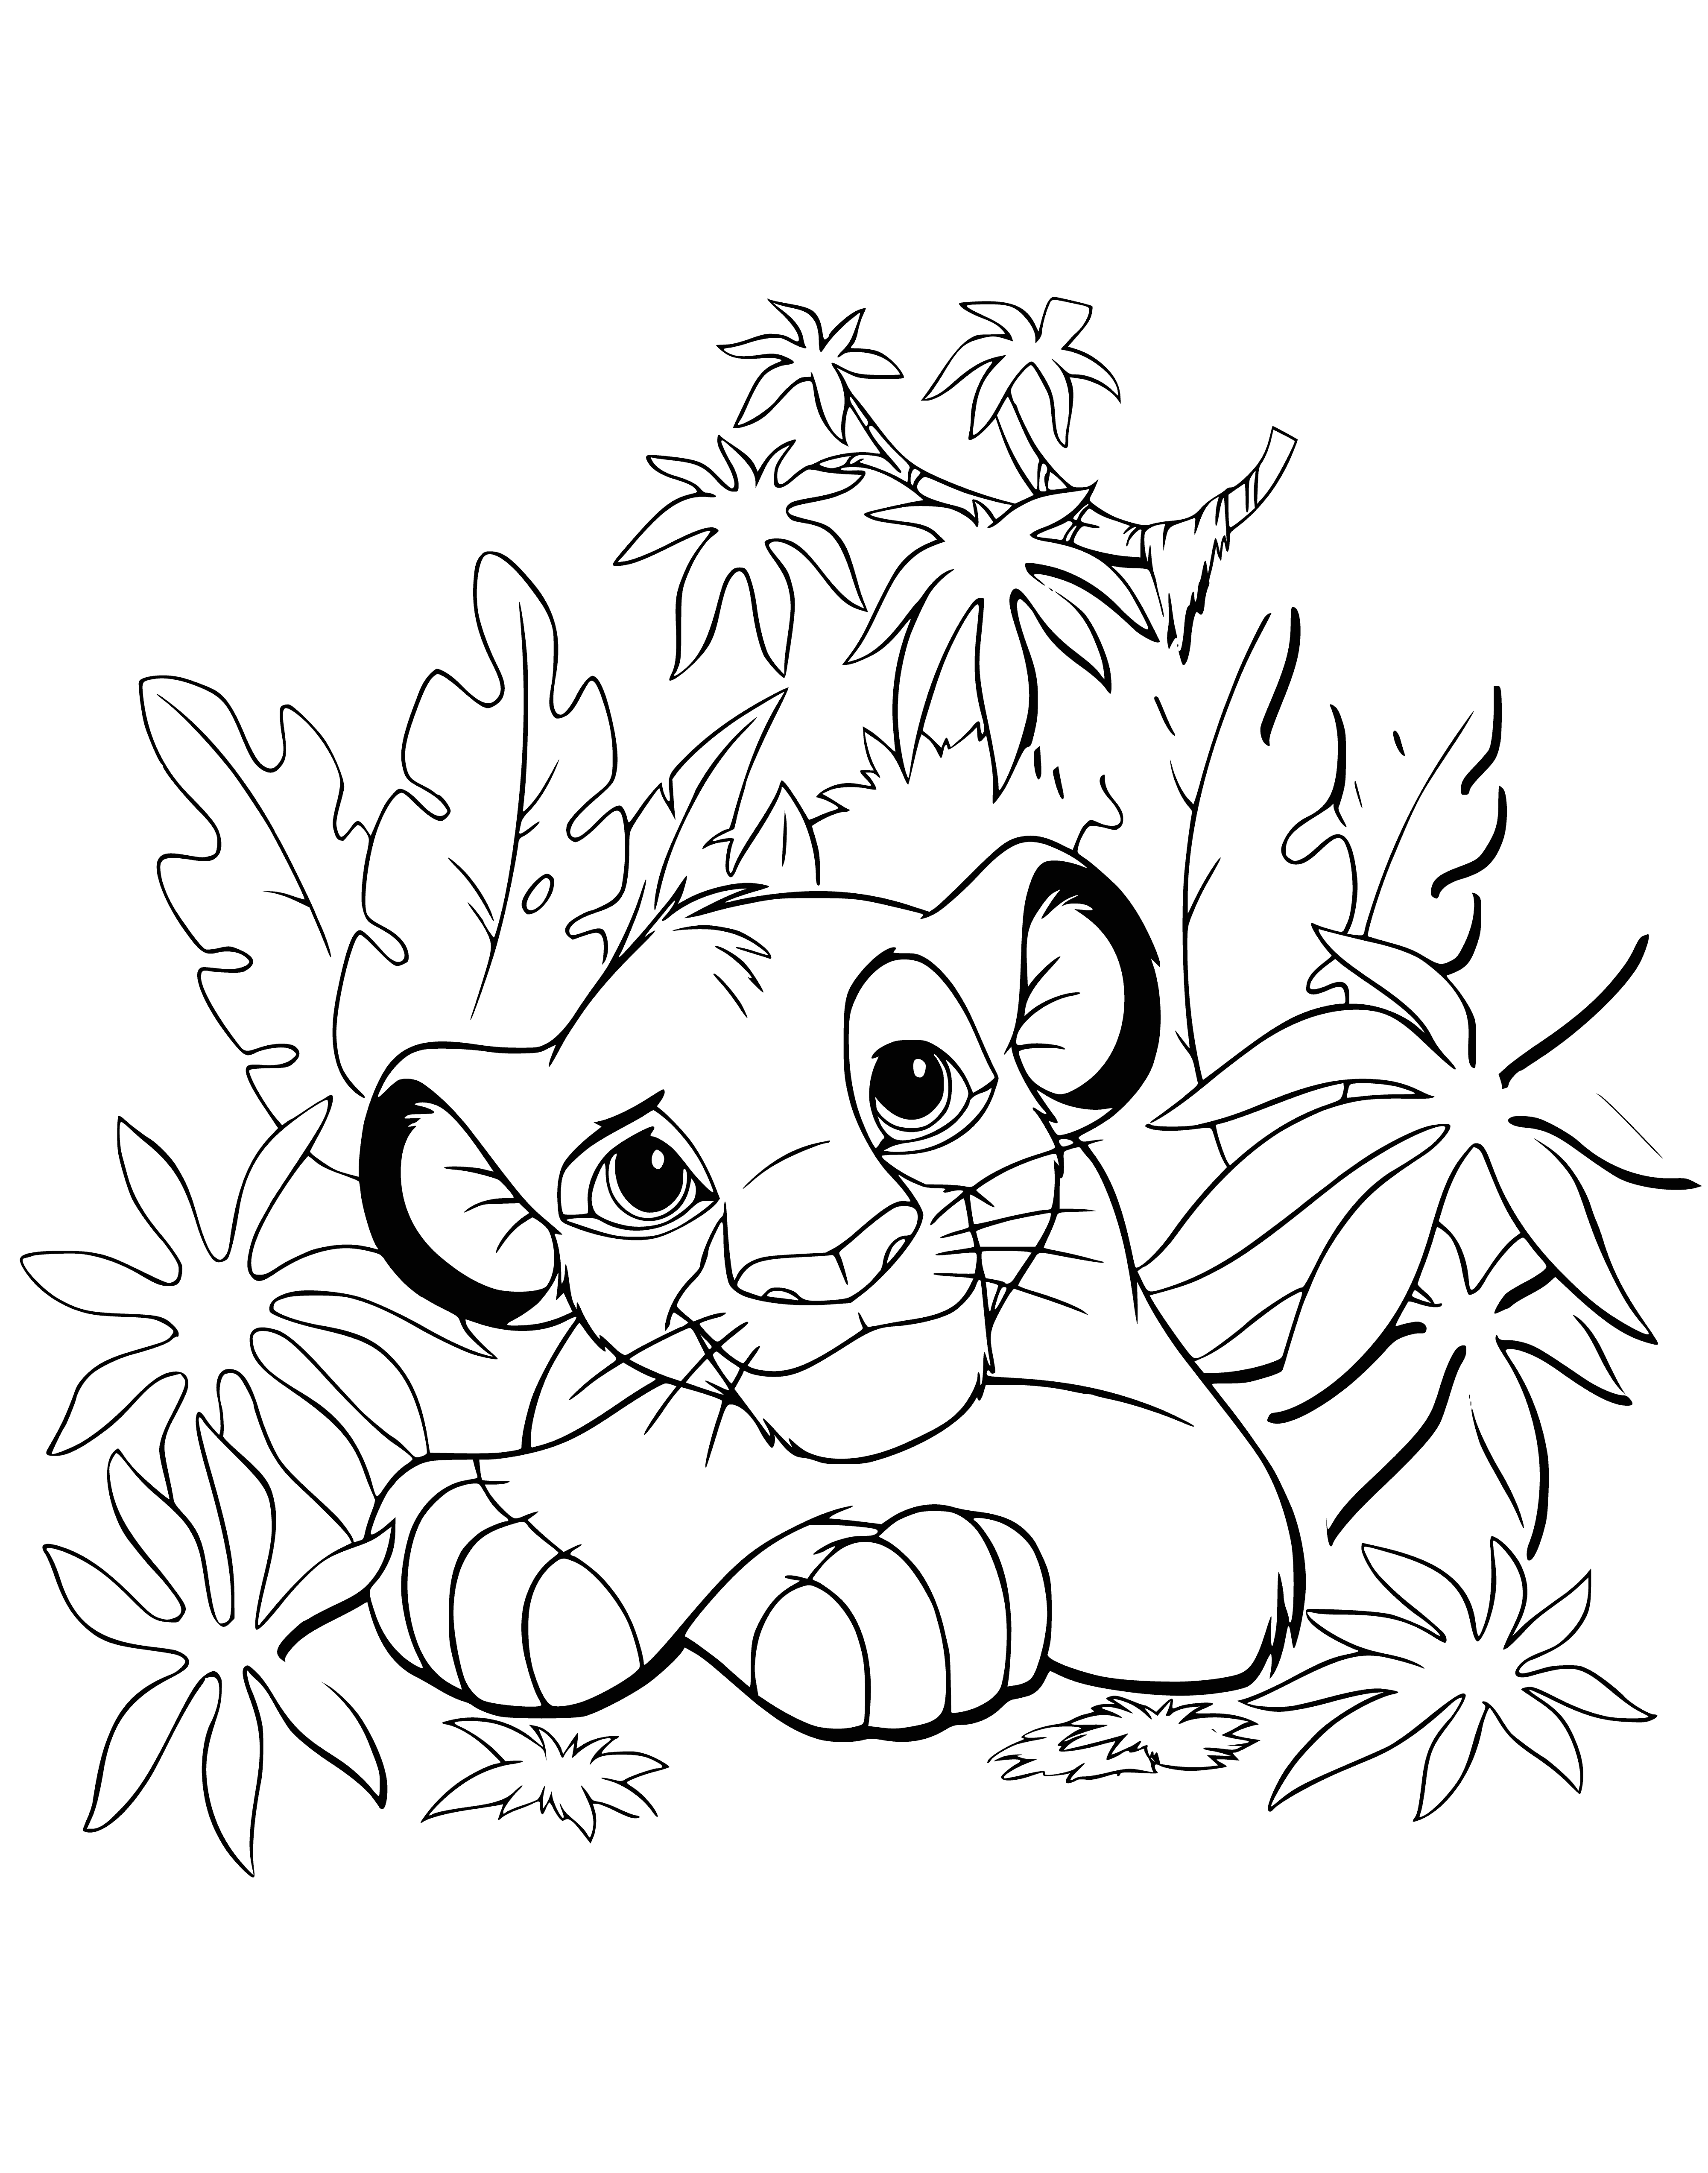 Simba lion cub coloring page